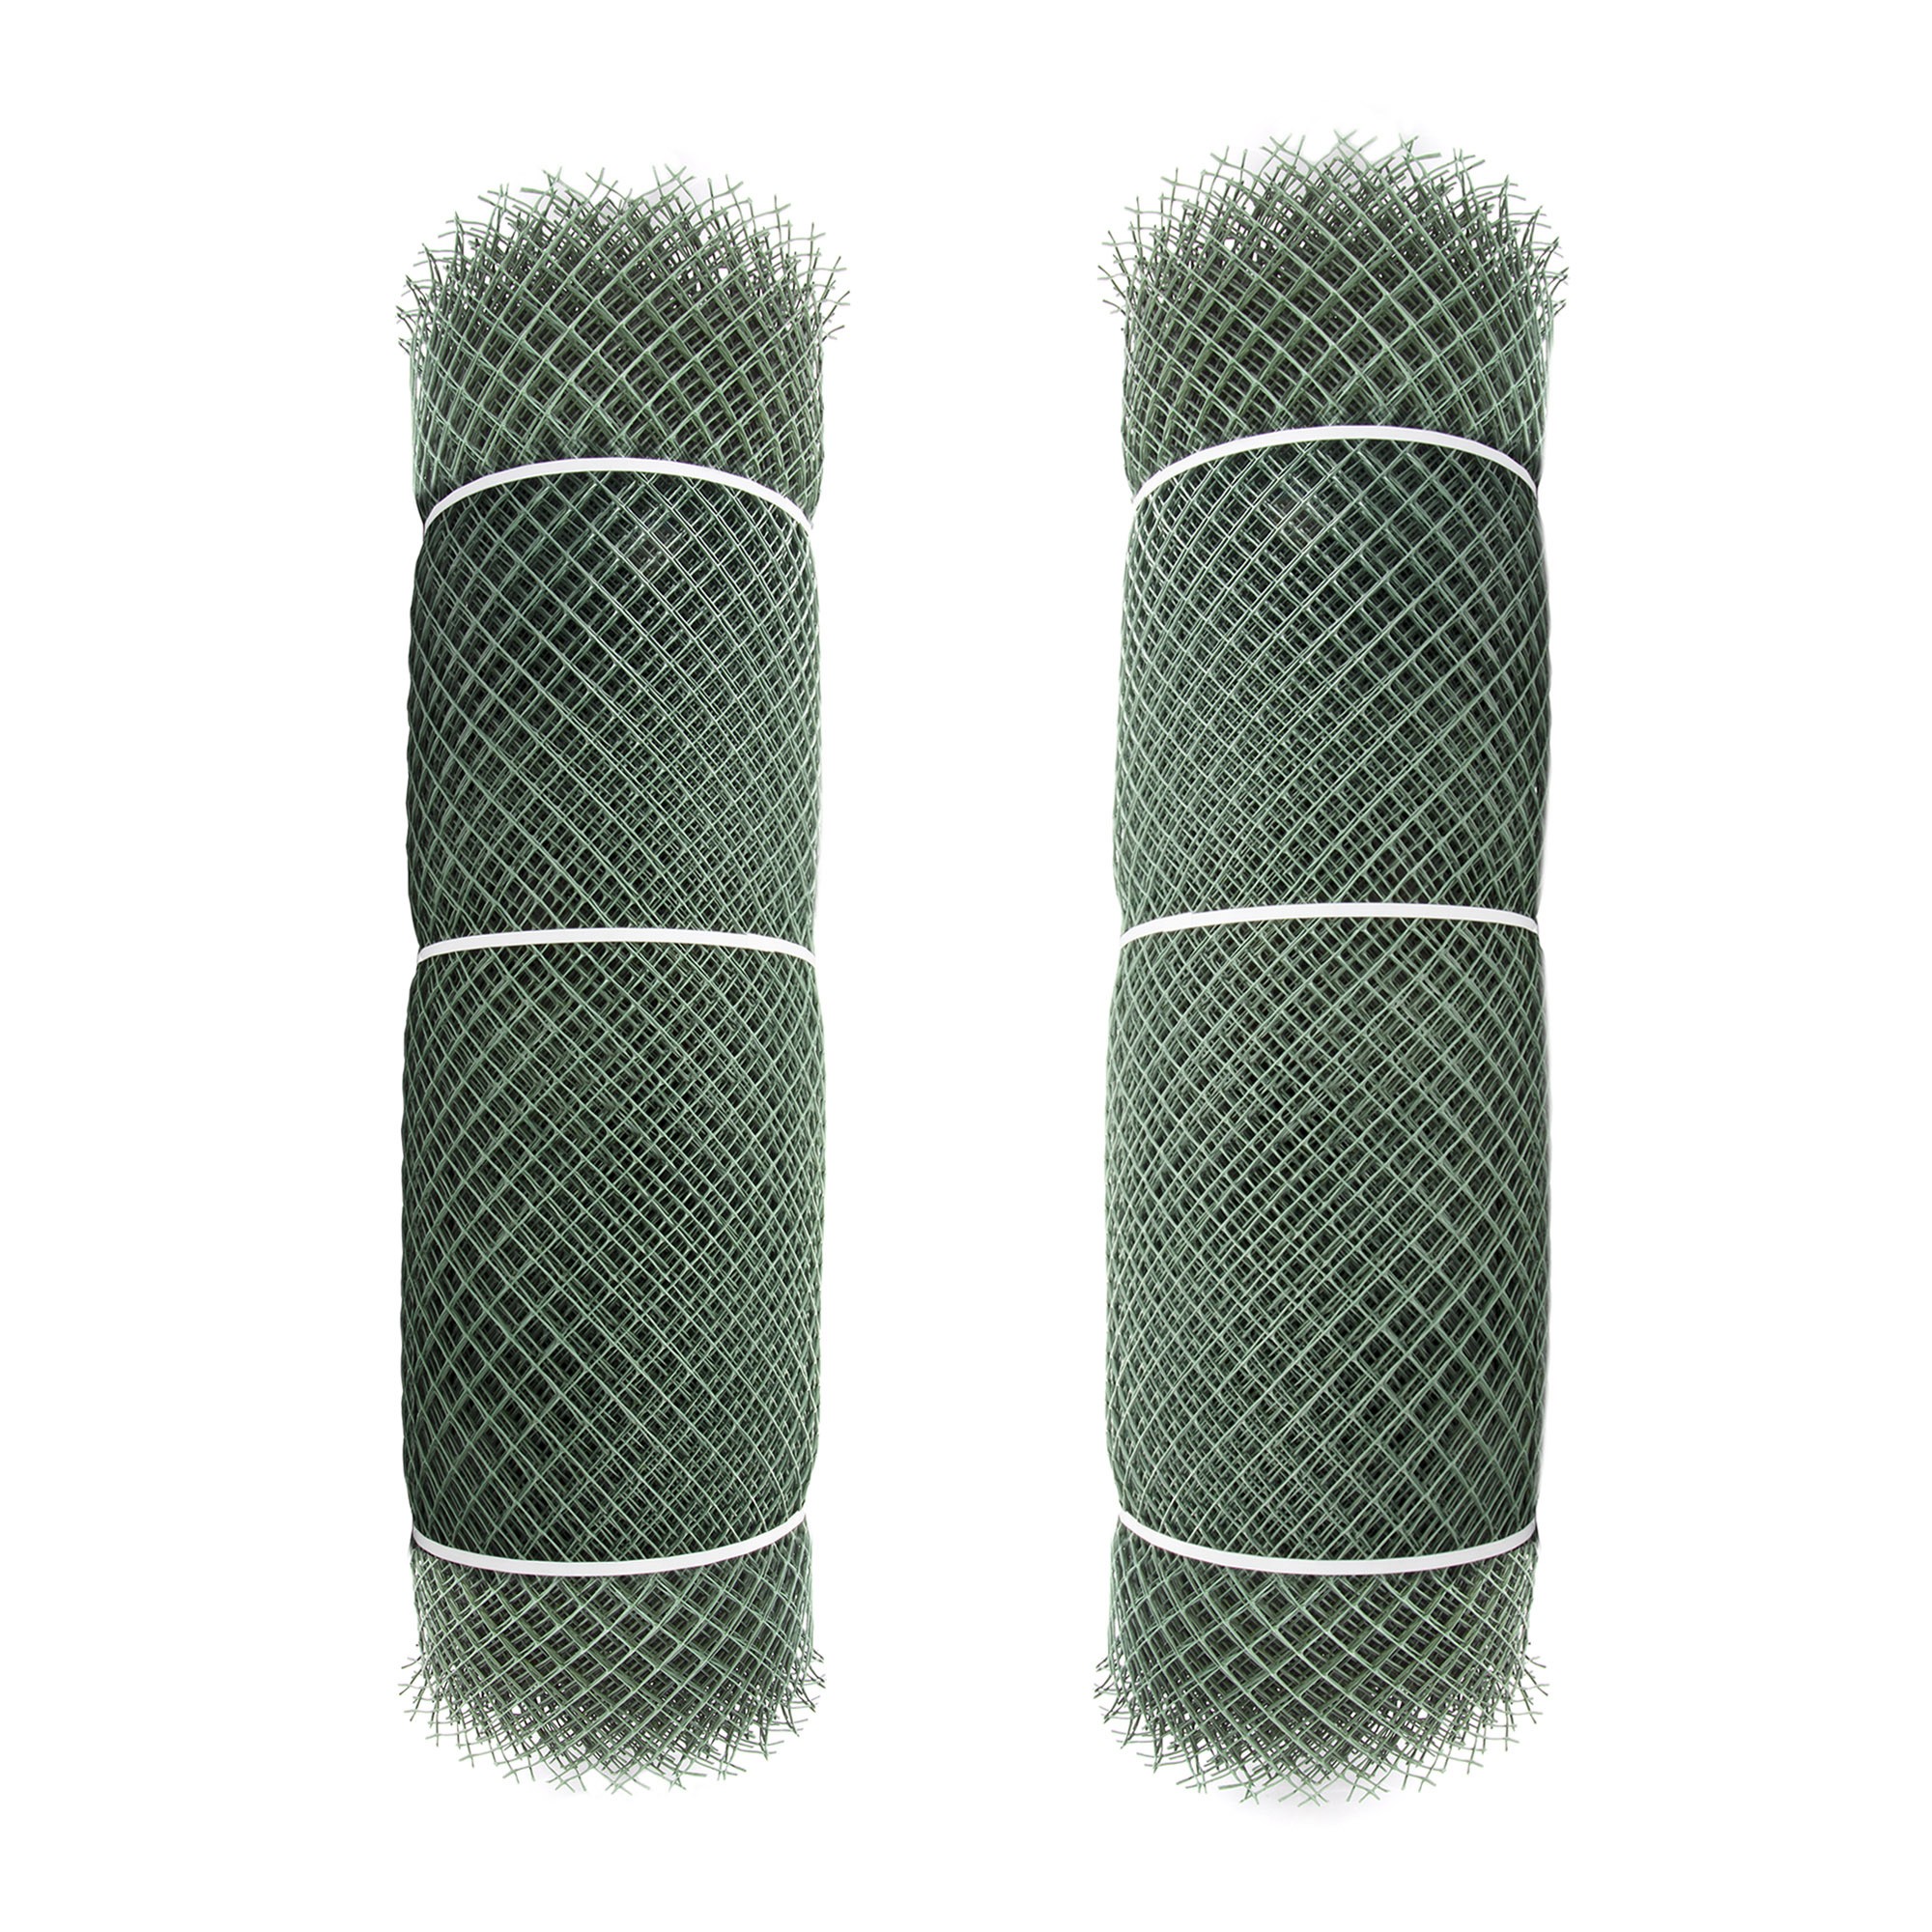 Tenax 2 Ft. H. x 25 Ft. L. High-Density Polyethylene Garden Fence, Gre –  Hemlock Hardware